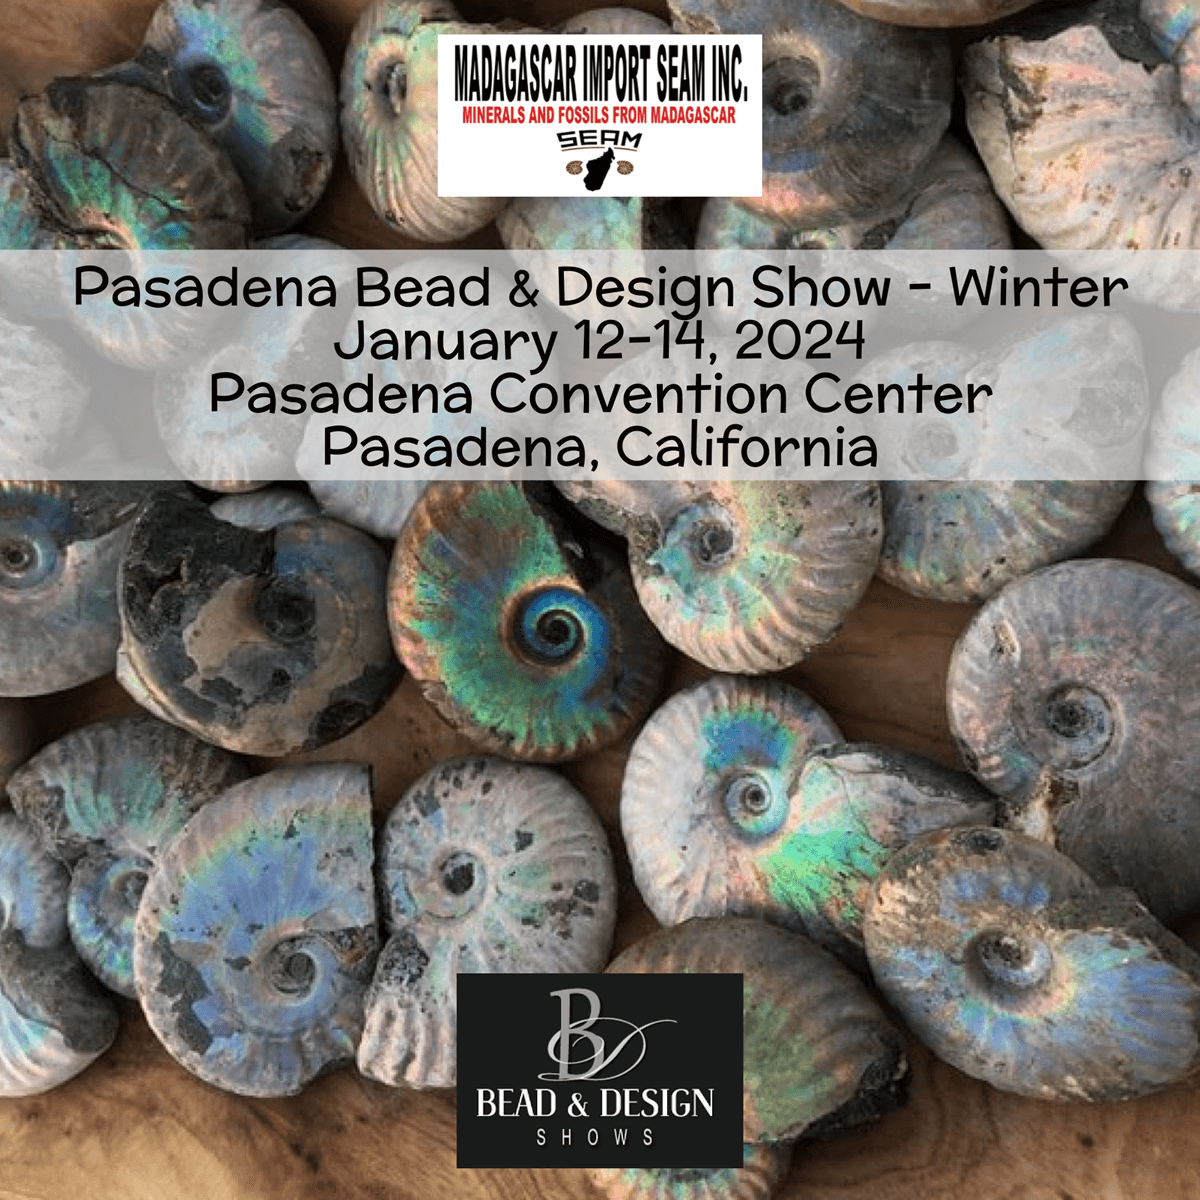 Pasadena Bead & Design Shows - Winter 2024